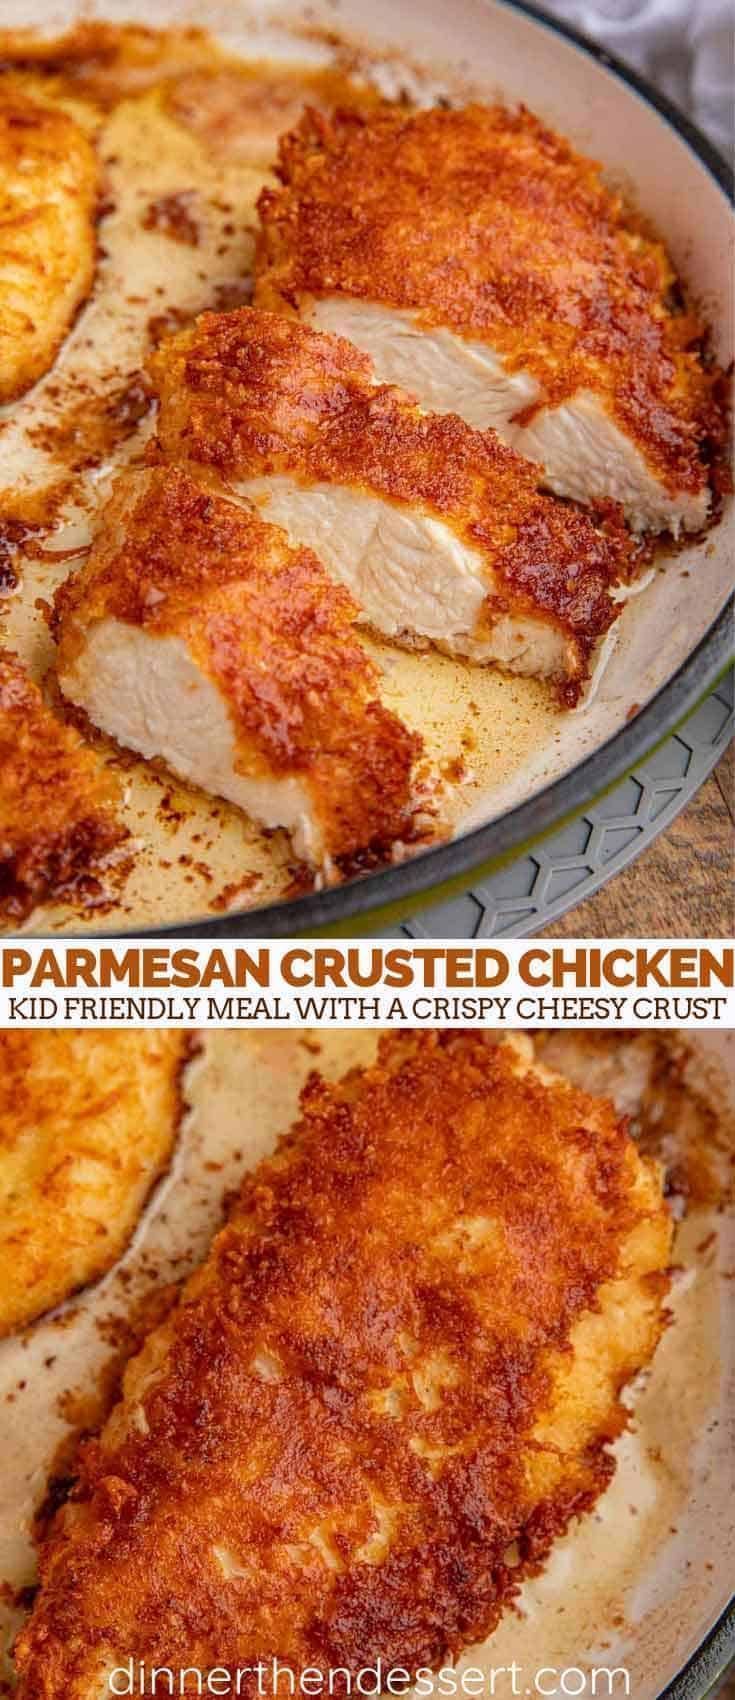 19 dinner recipes for family chicken ideas